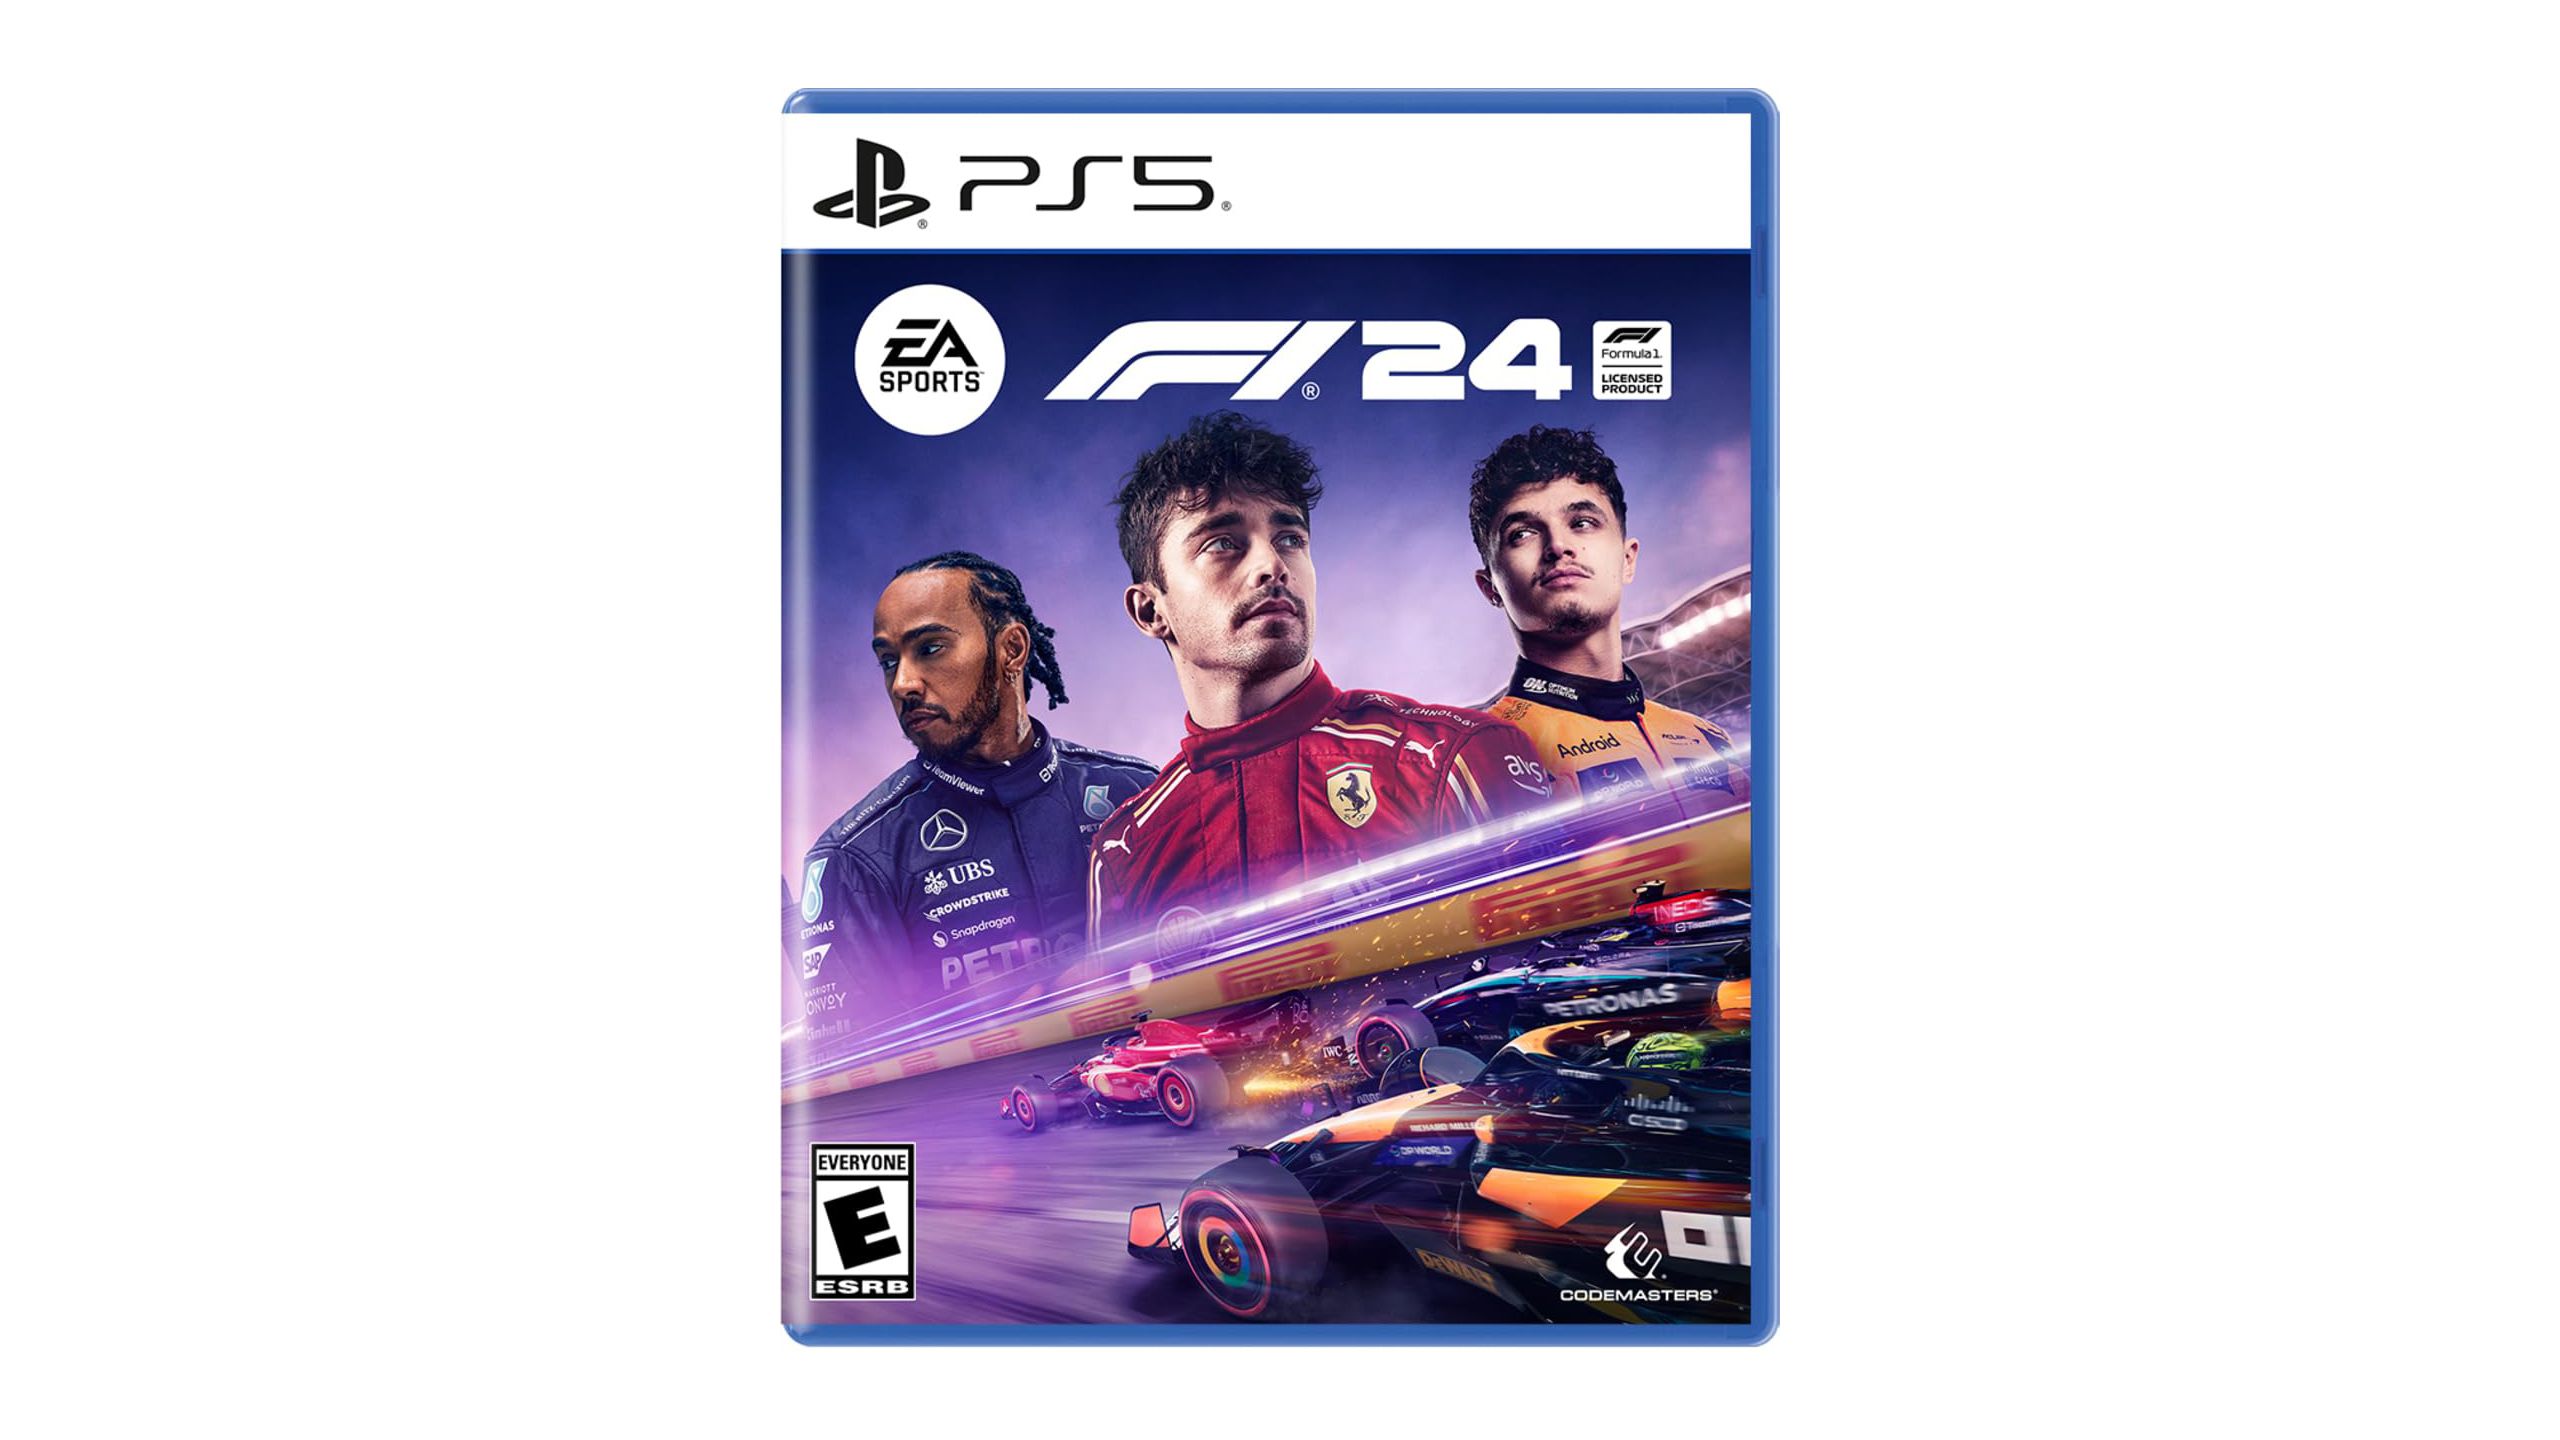 F1 24 PS5 edition